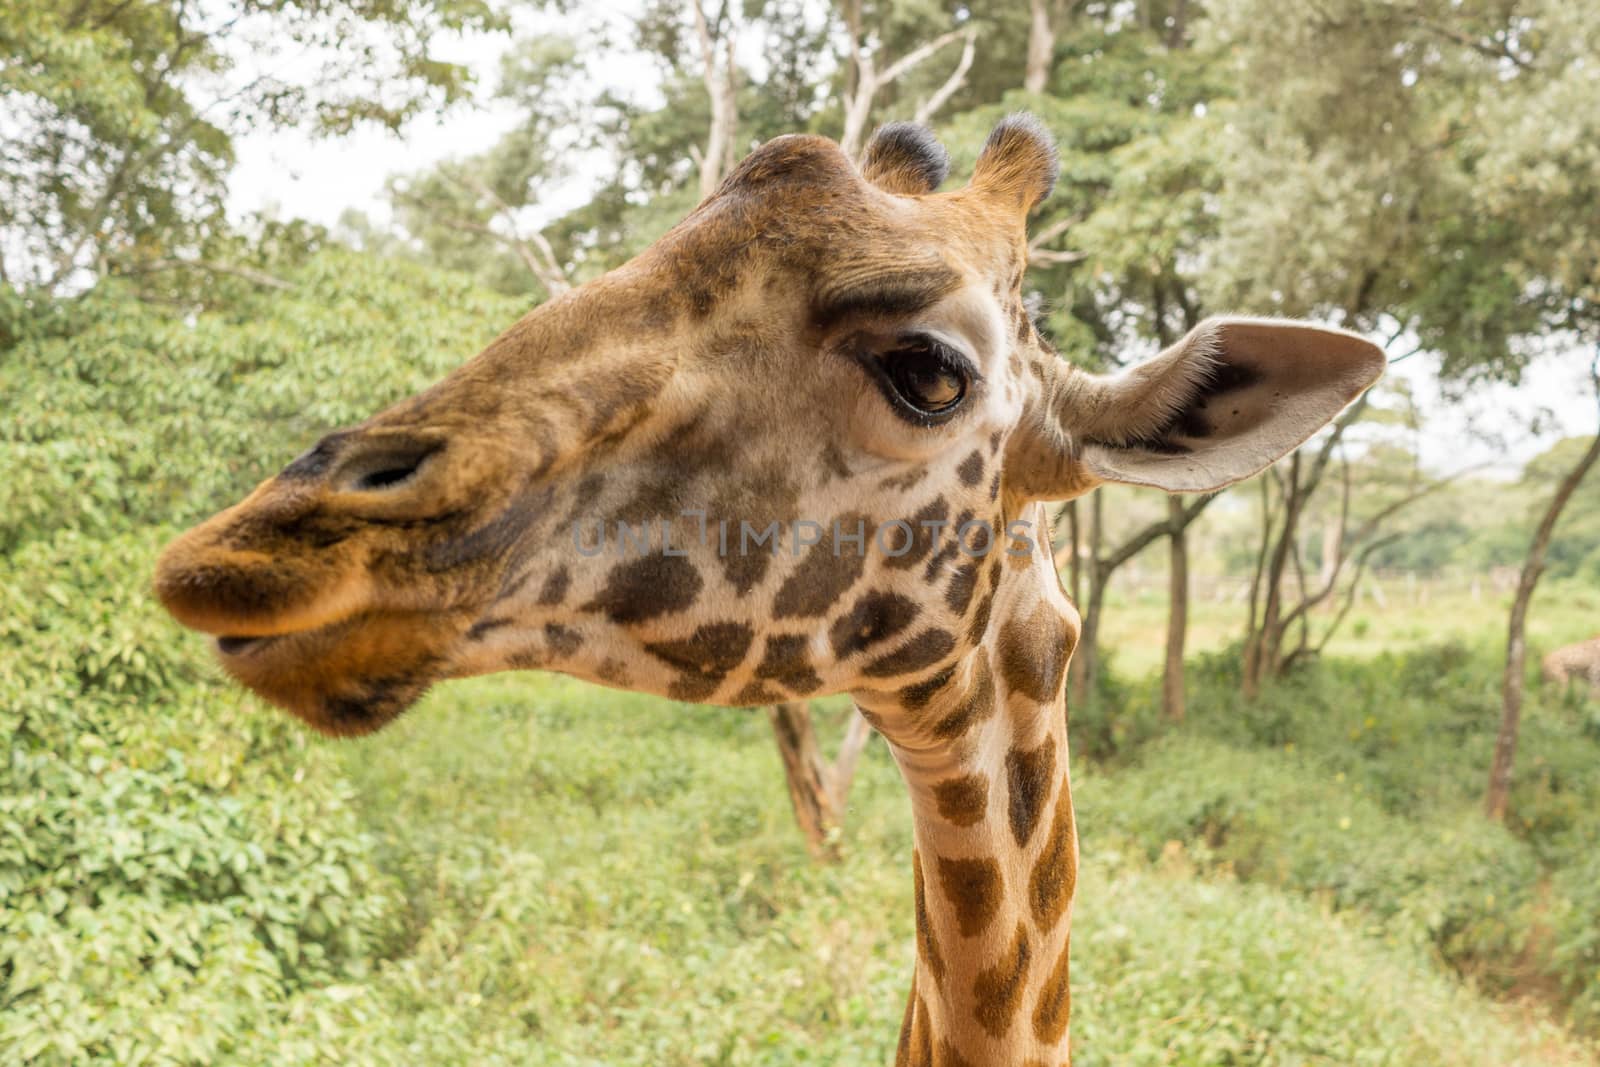 Closeup headshot of an adult African Giraffe from the neck up